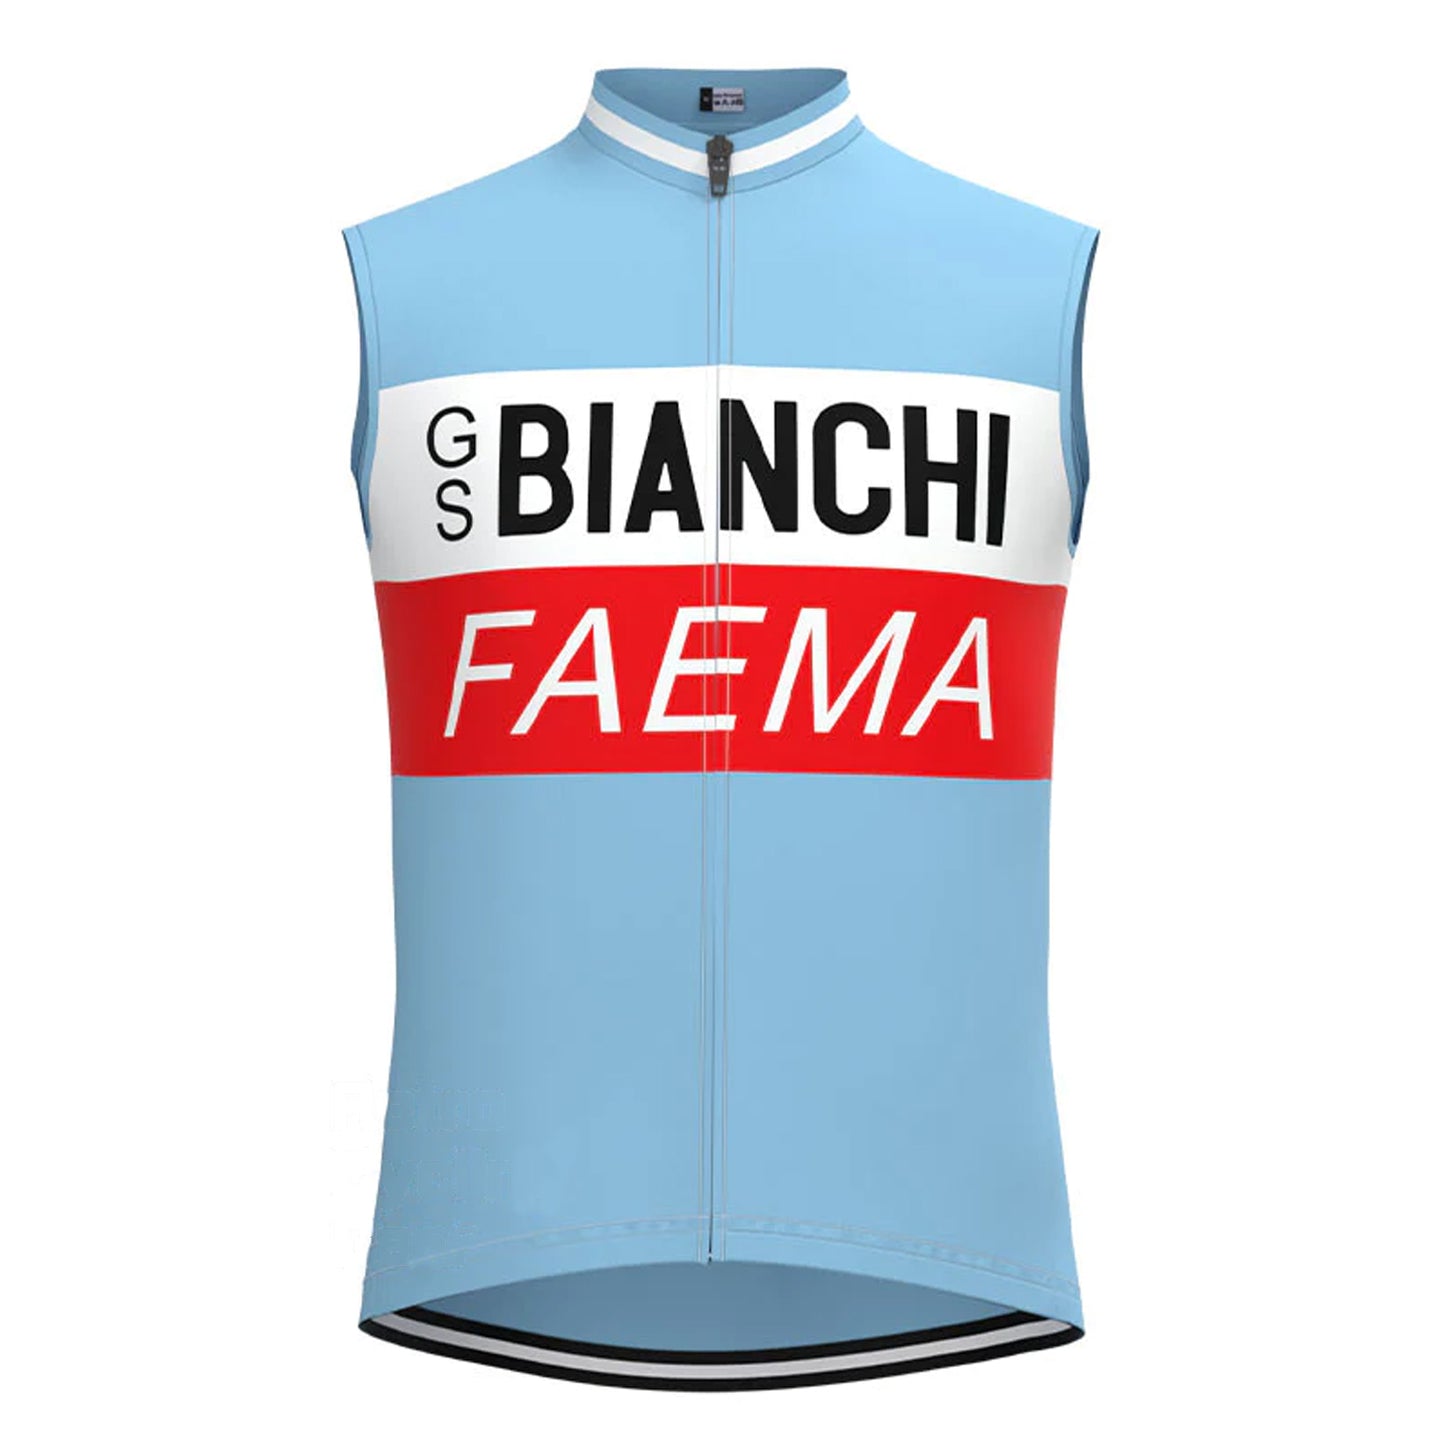 BIANCHI Red Blue Retro MTB Cycling Vest